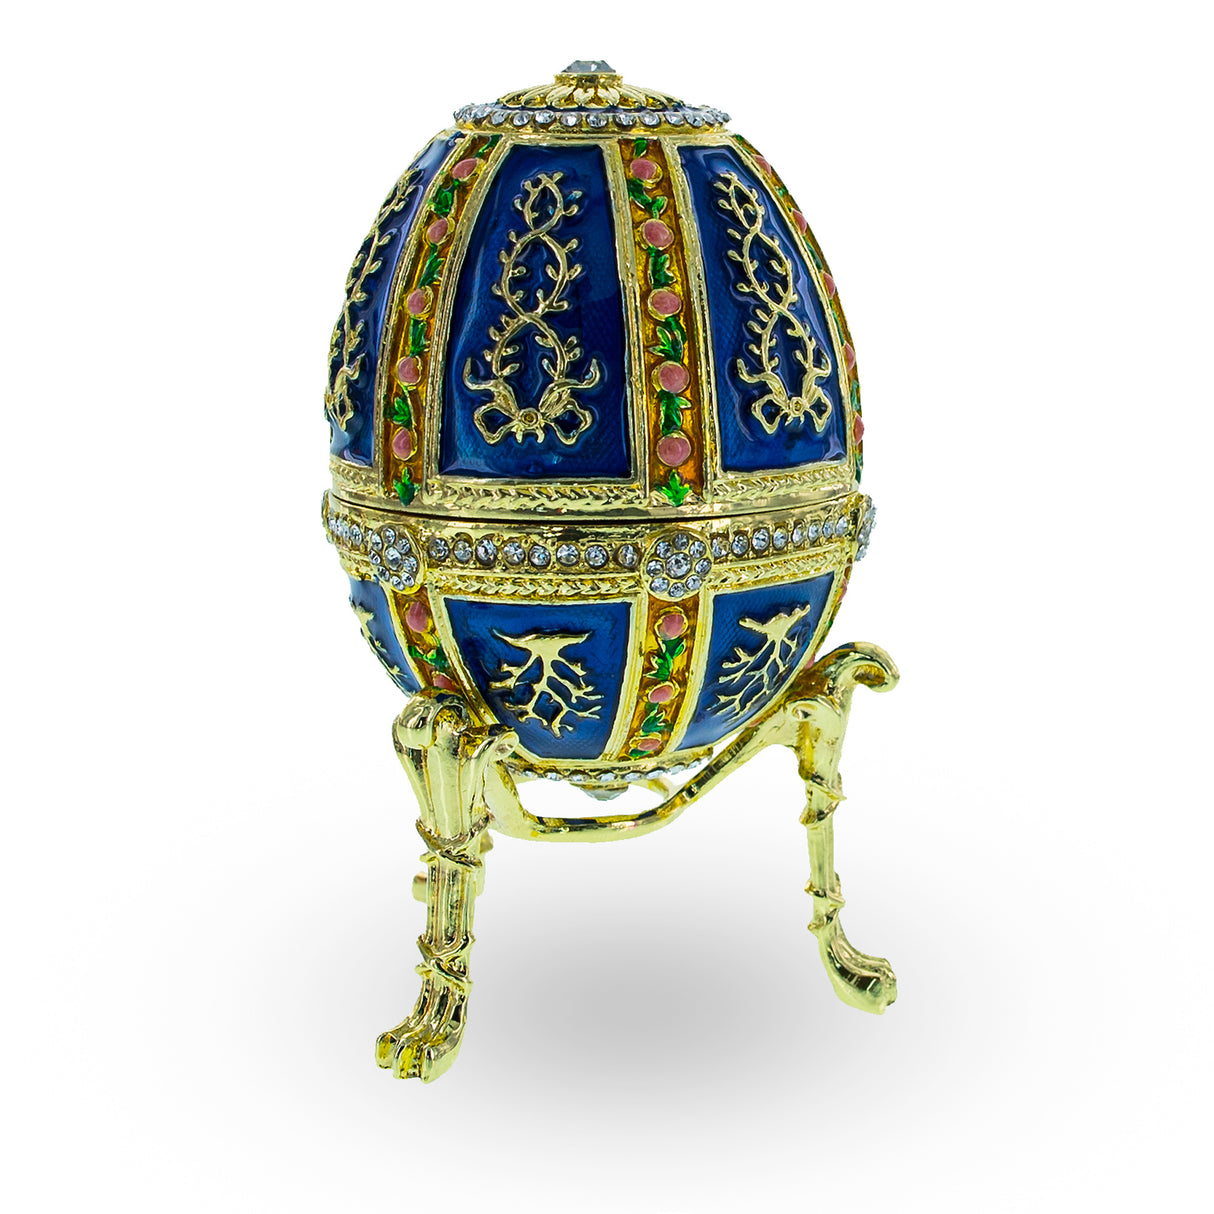 1899 Twelve Panel Royal Imperial Easter Egg in Blue Enamel in White color, Oval shape